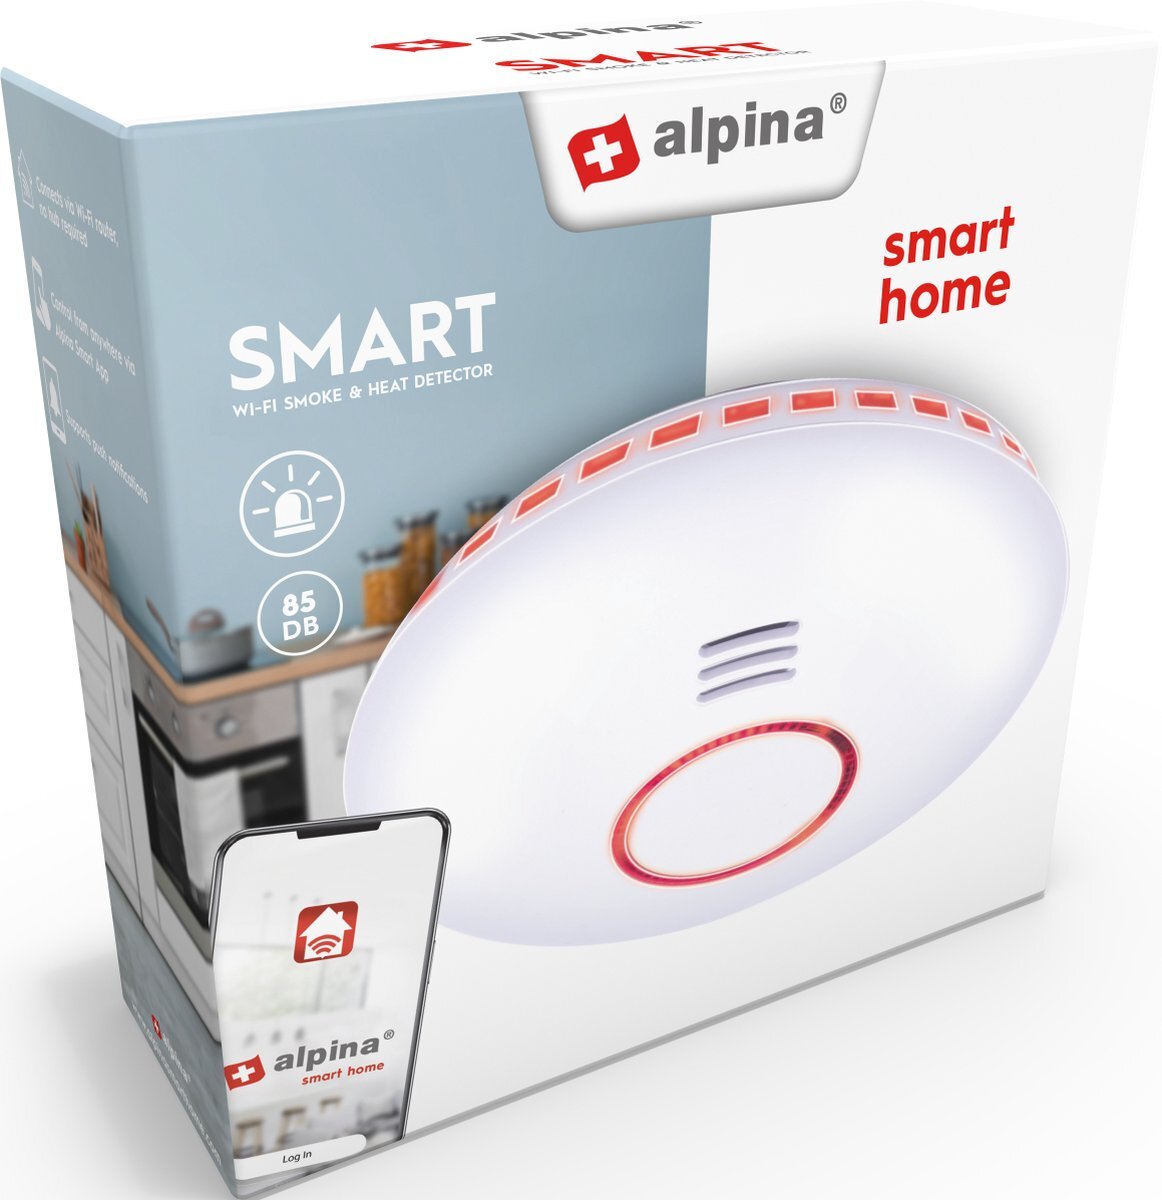 Alpina Smart home - Wifi Warmte- en Rookmelder - Foto-Elektrische Rookmelder - Wand en Plafond Montage - 85 dB - Smart Home App